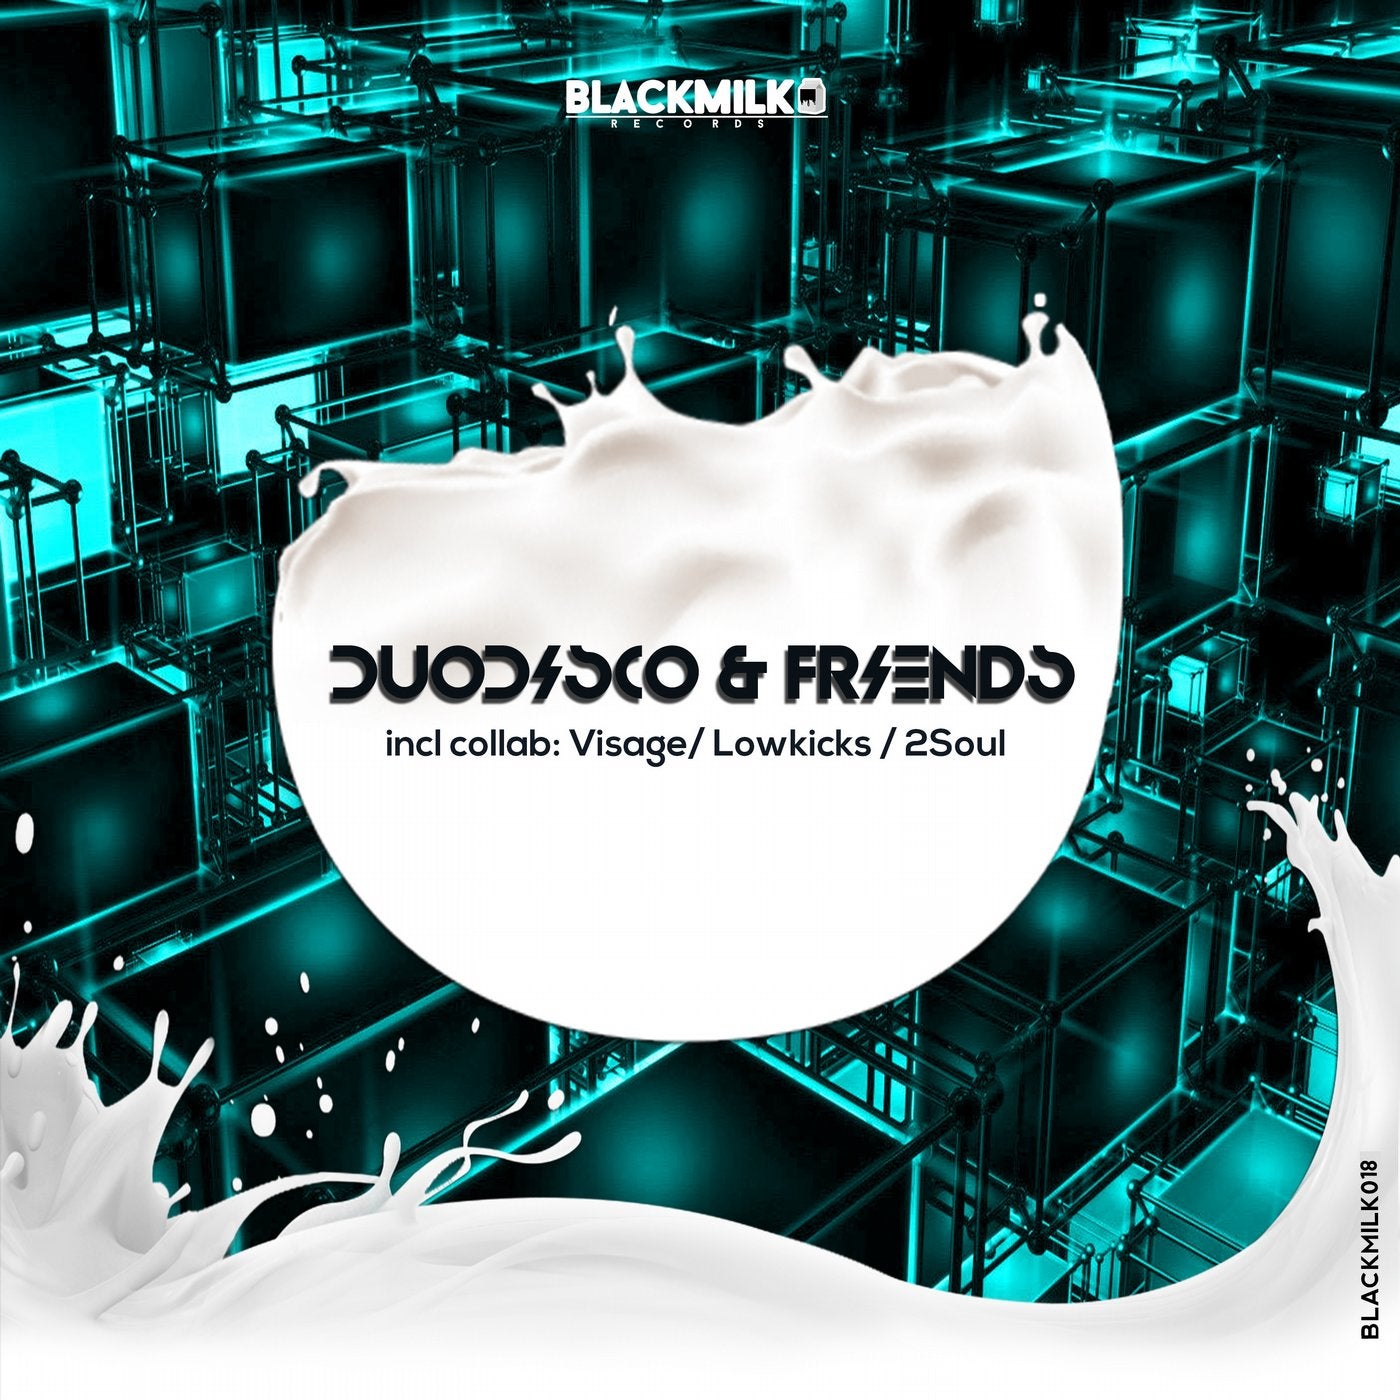 Duodisco & Friends